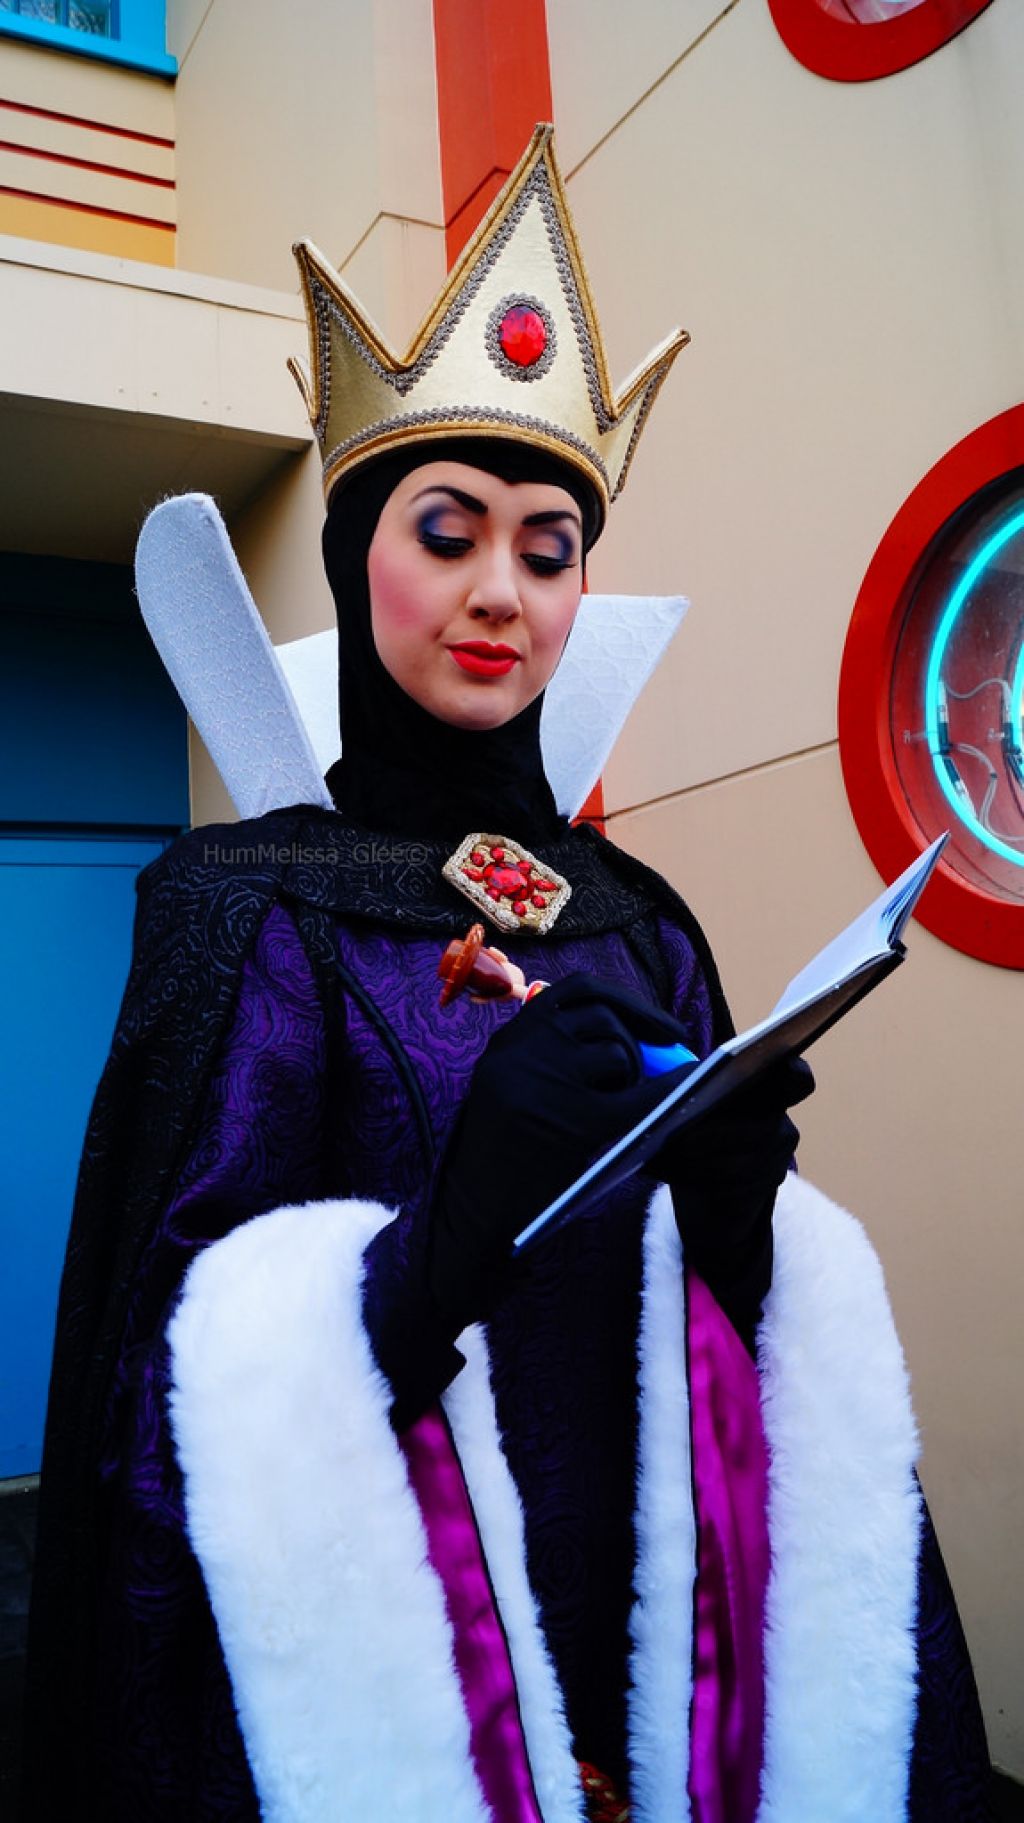 disneyland paris11 Disney Magic on Parade, Disneyland Paris